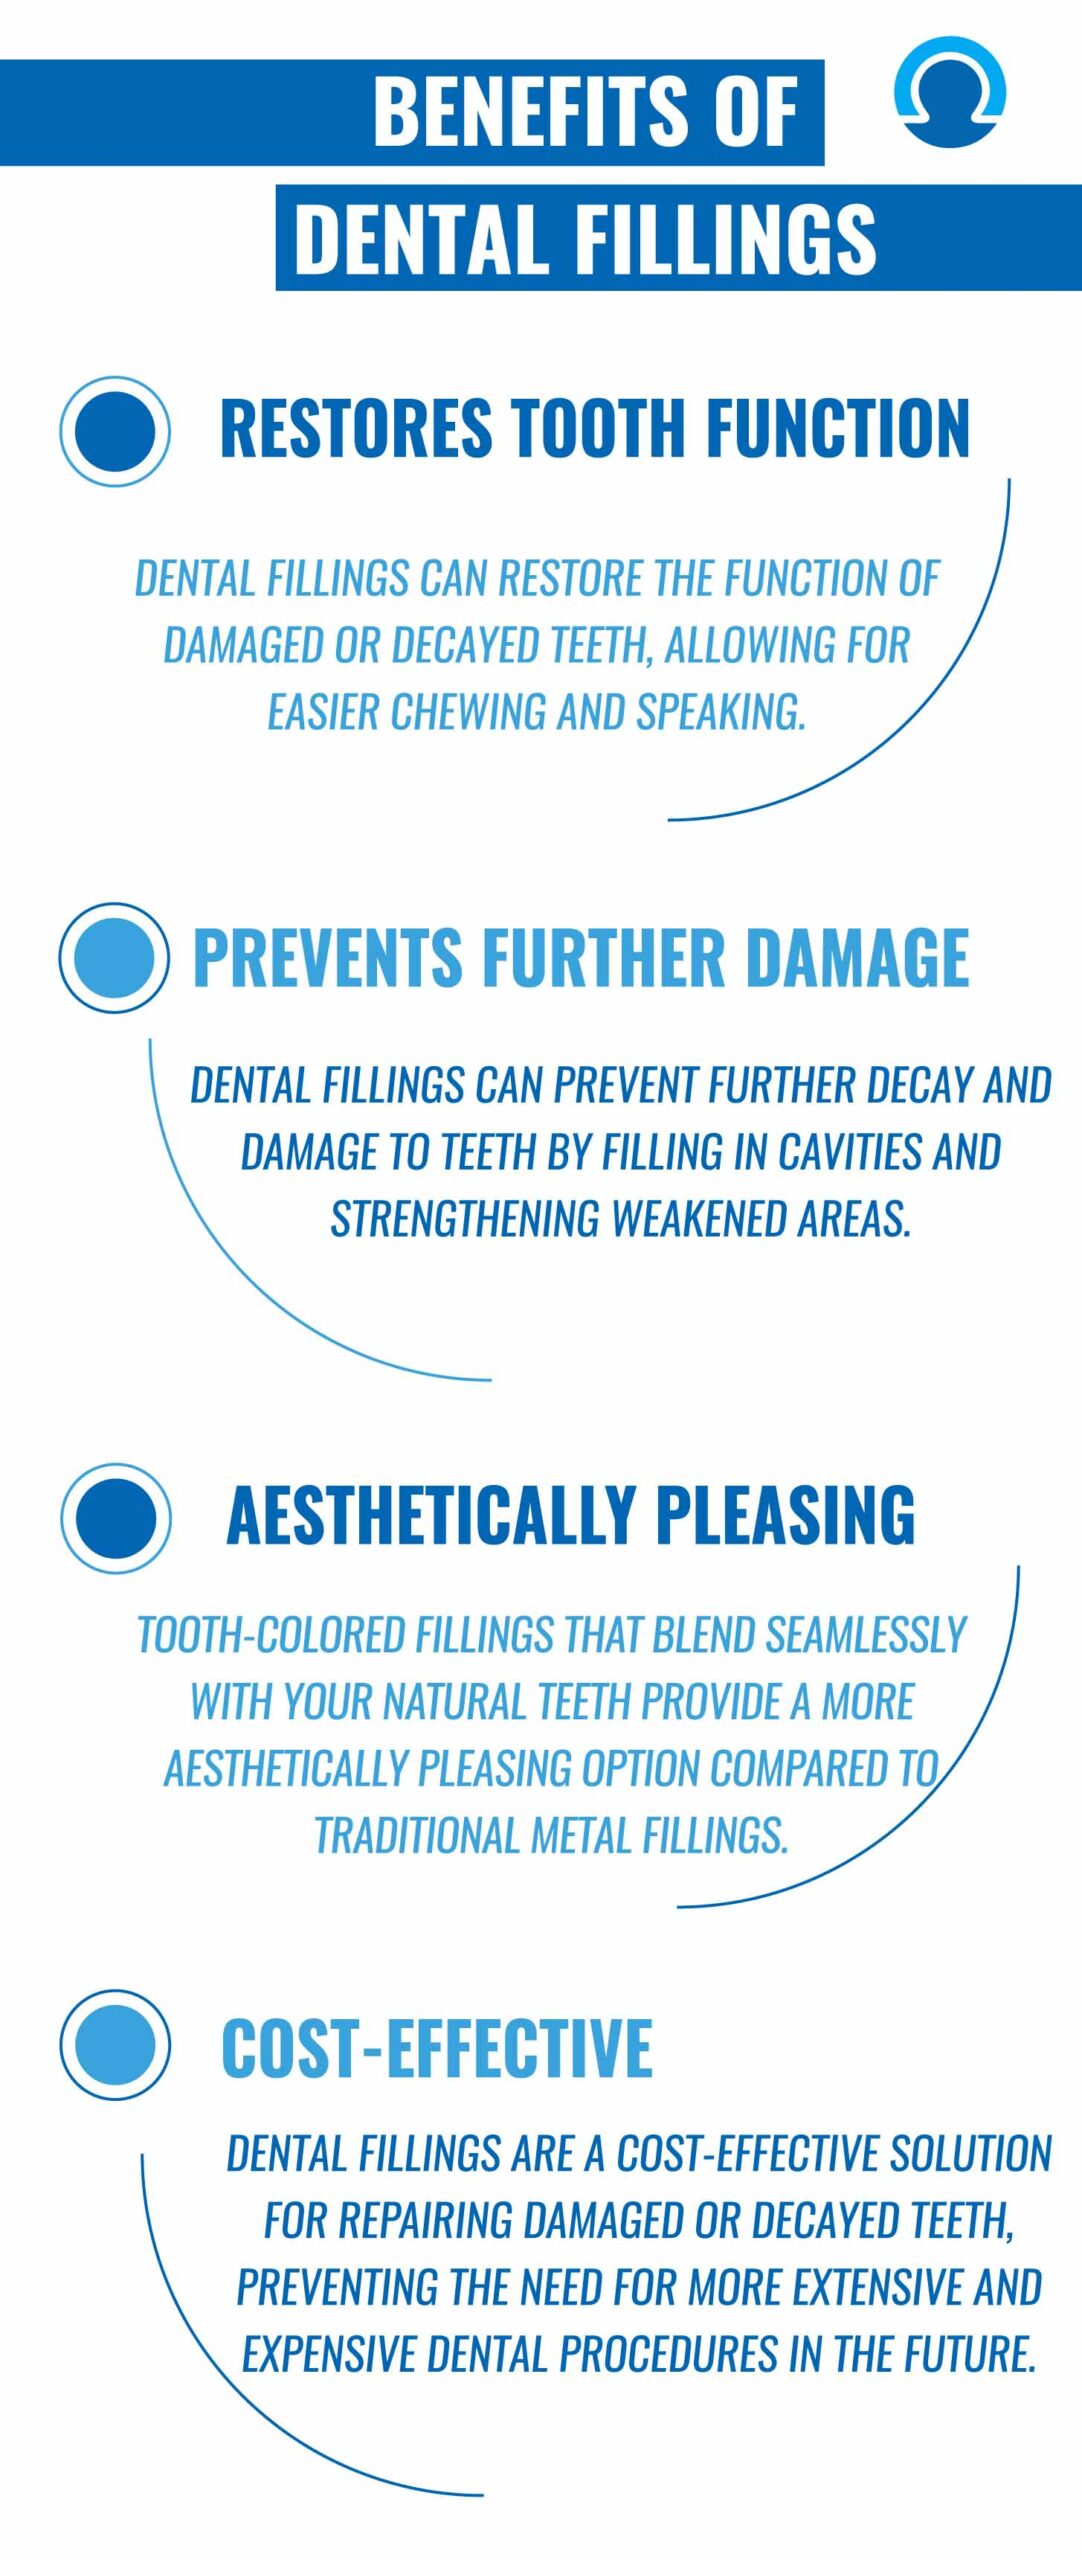 Benefits of Dental Fillings in Houston, Texas